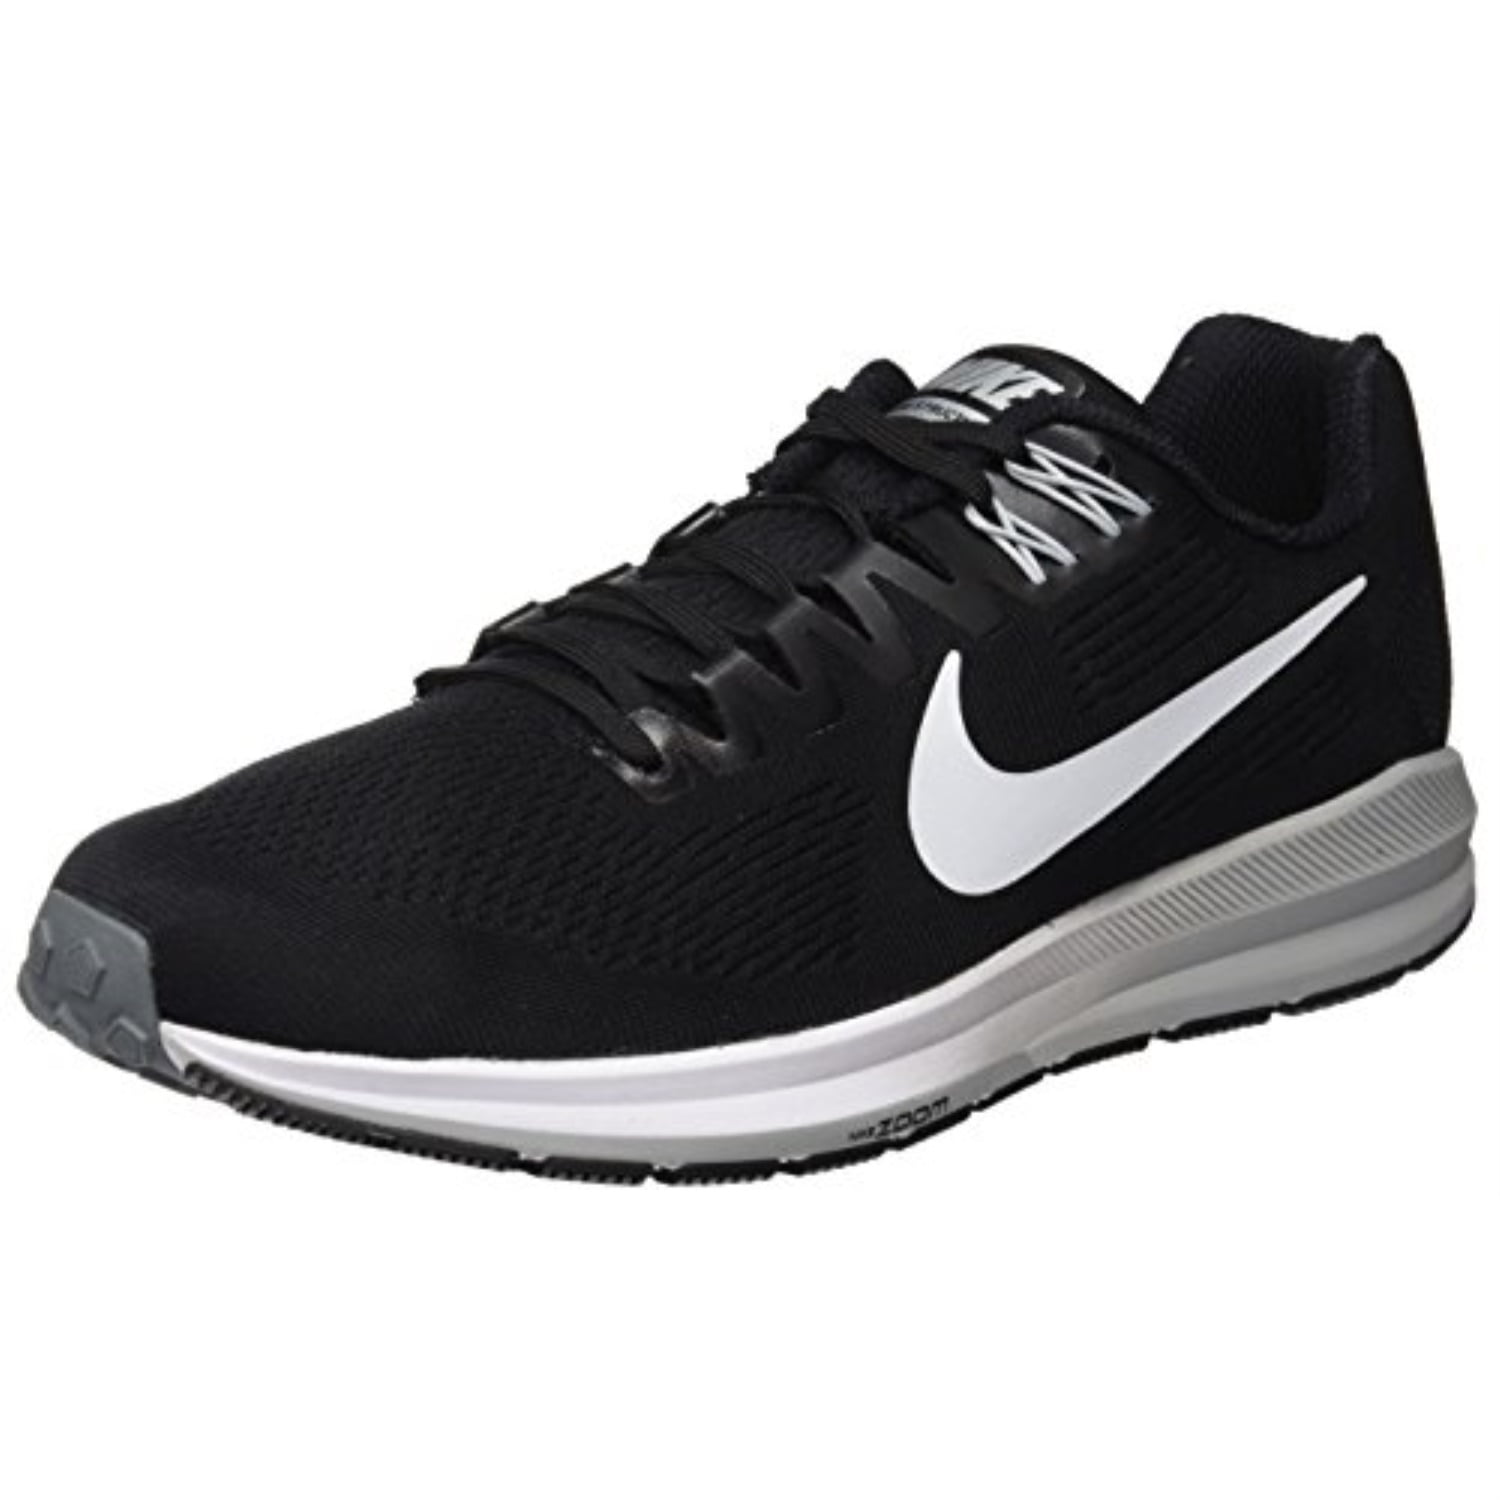 Nike - Nike Men's Air Zoom Structure 21 Running Shoe, Black/White/Wolf ...